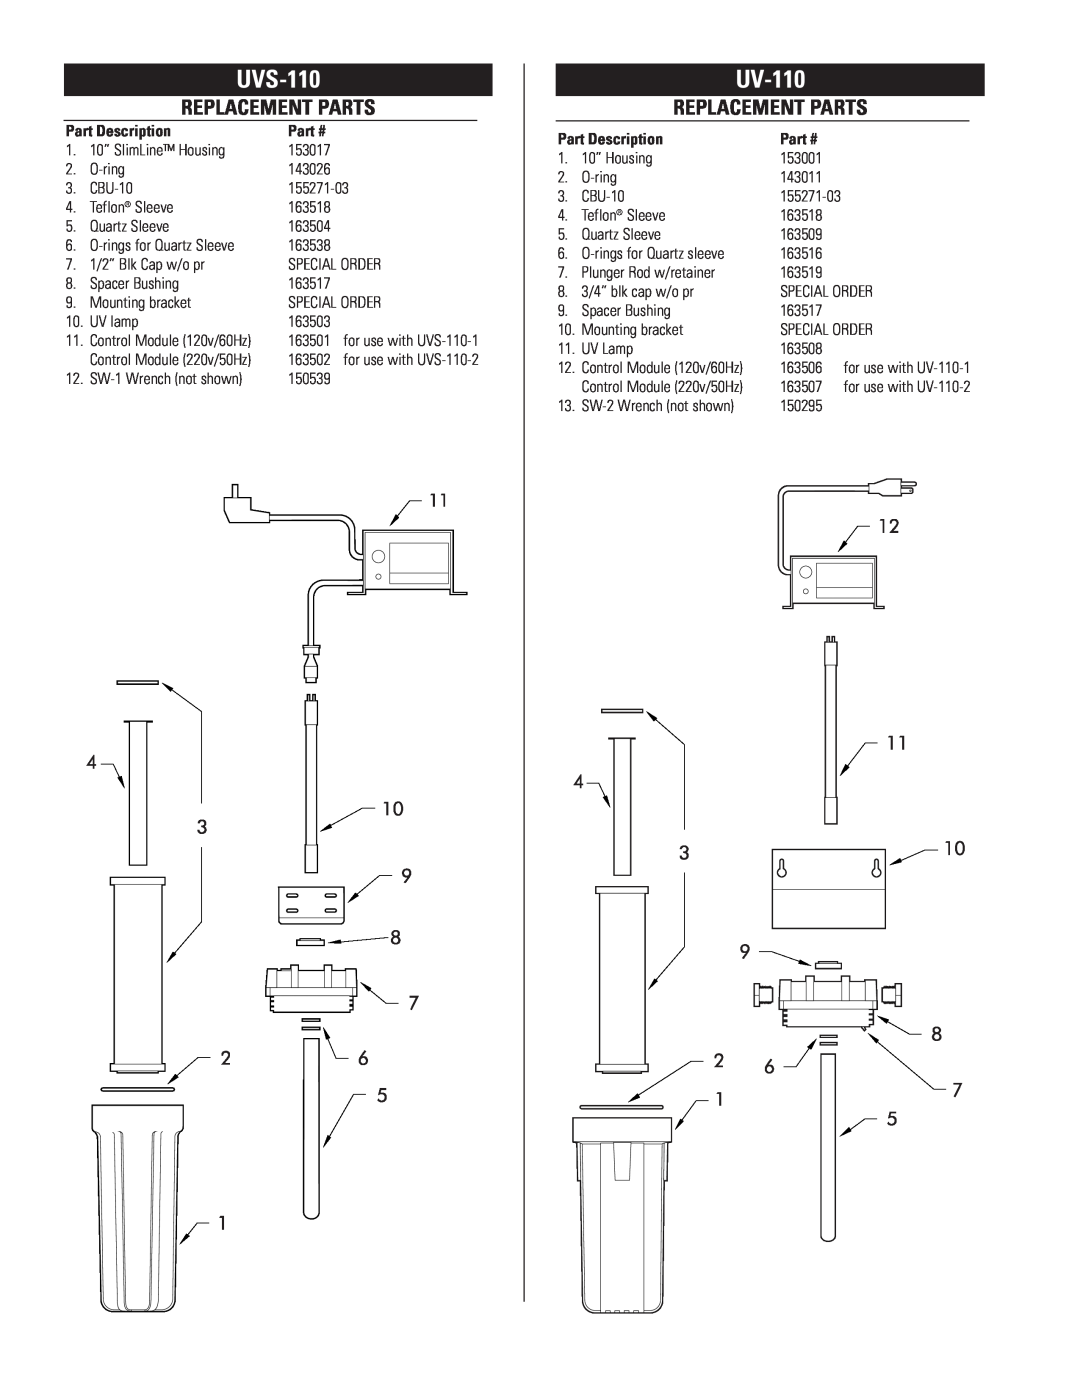 Pentair UV-120, UVBB-120 specifications UVS-110, UV-110, Replacement Parts, Part Description 